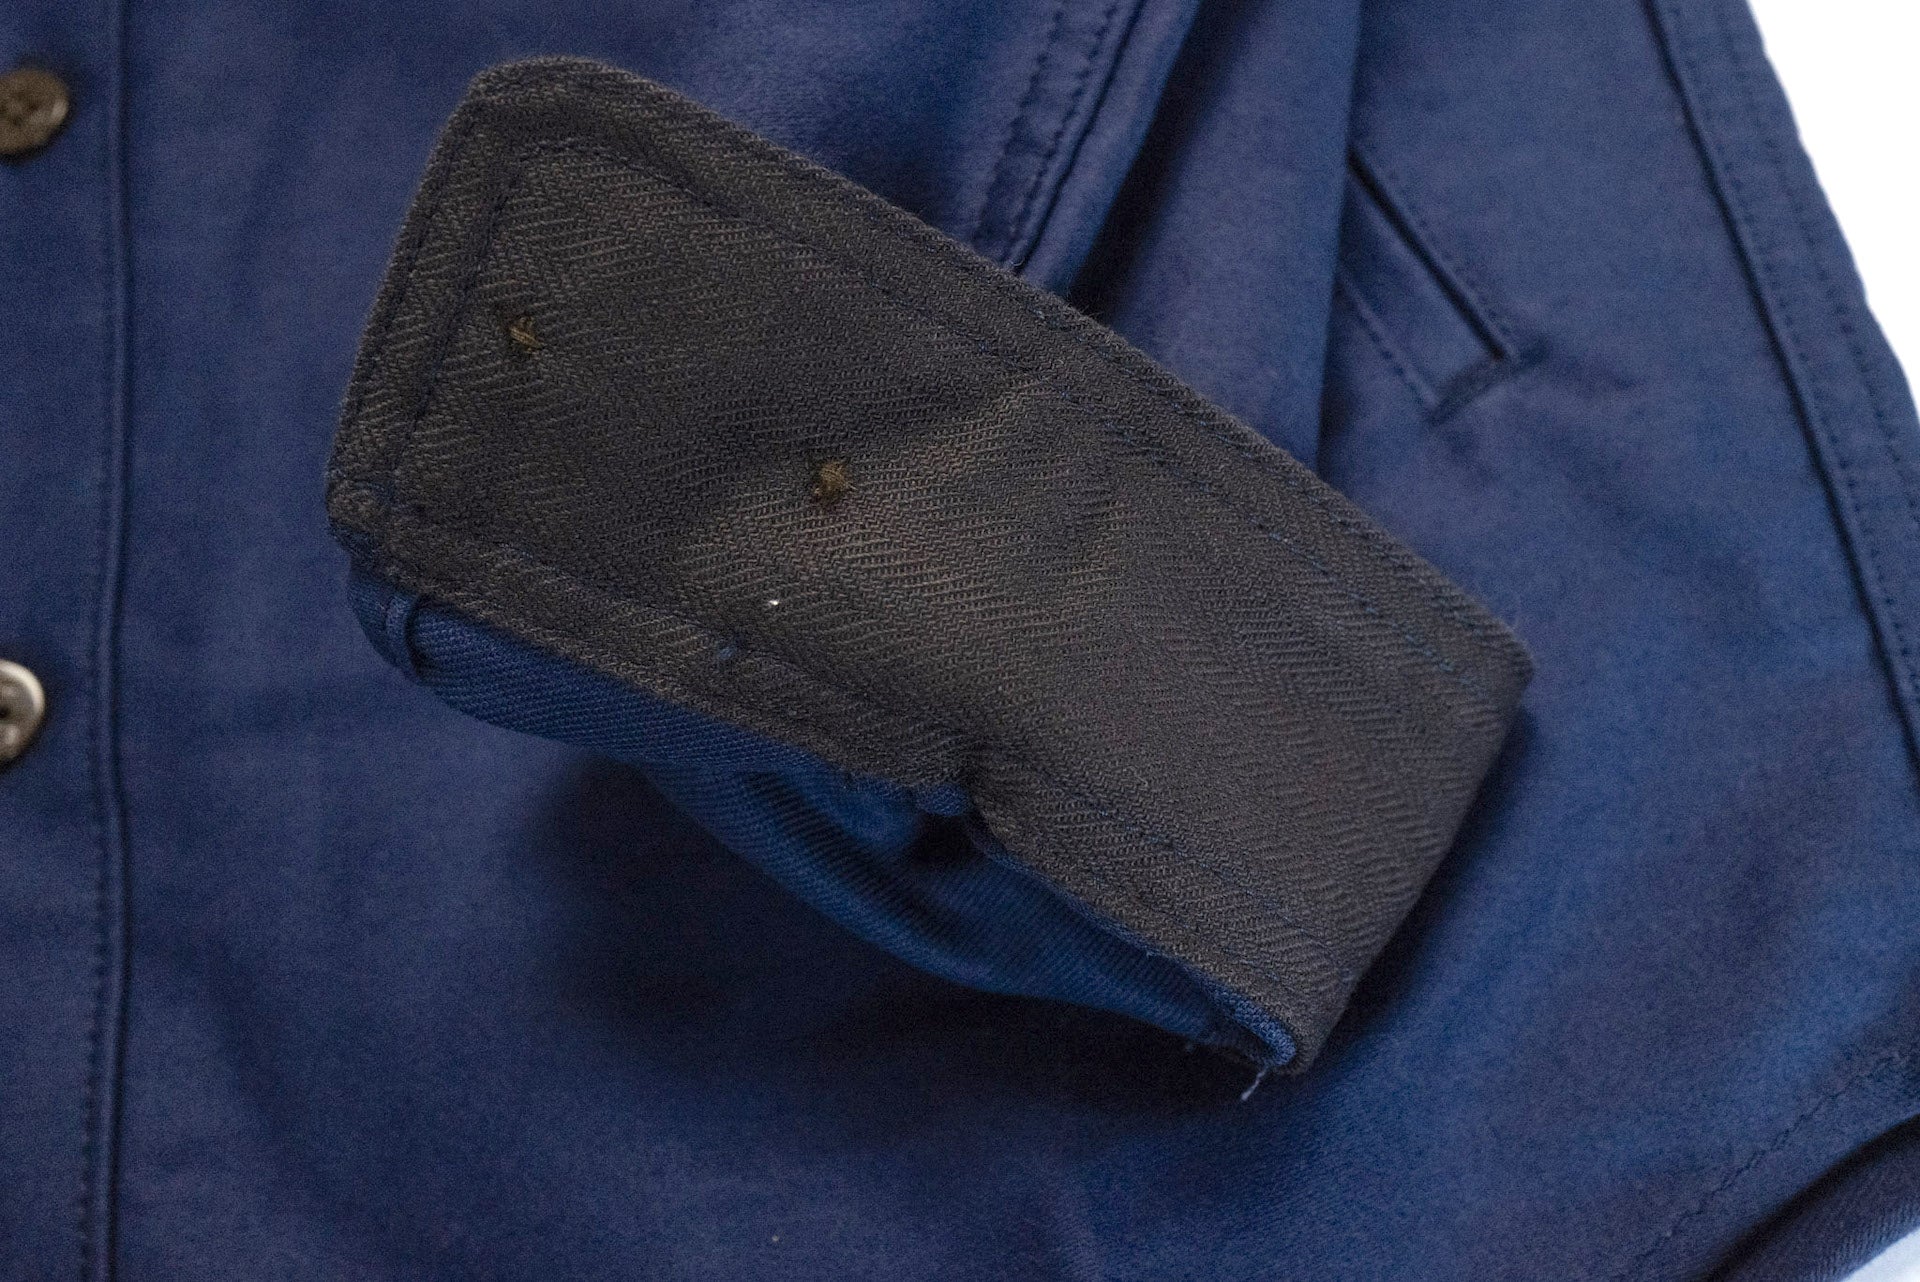 Unique Garment 'Deck Master' Moleskin C.P.O Jacketed Shirt (Royal Blue)